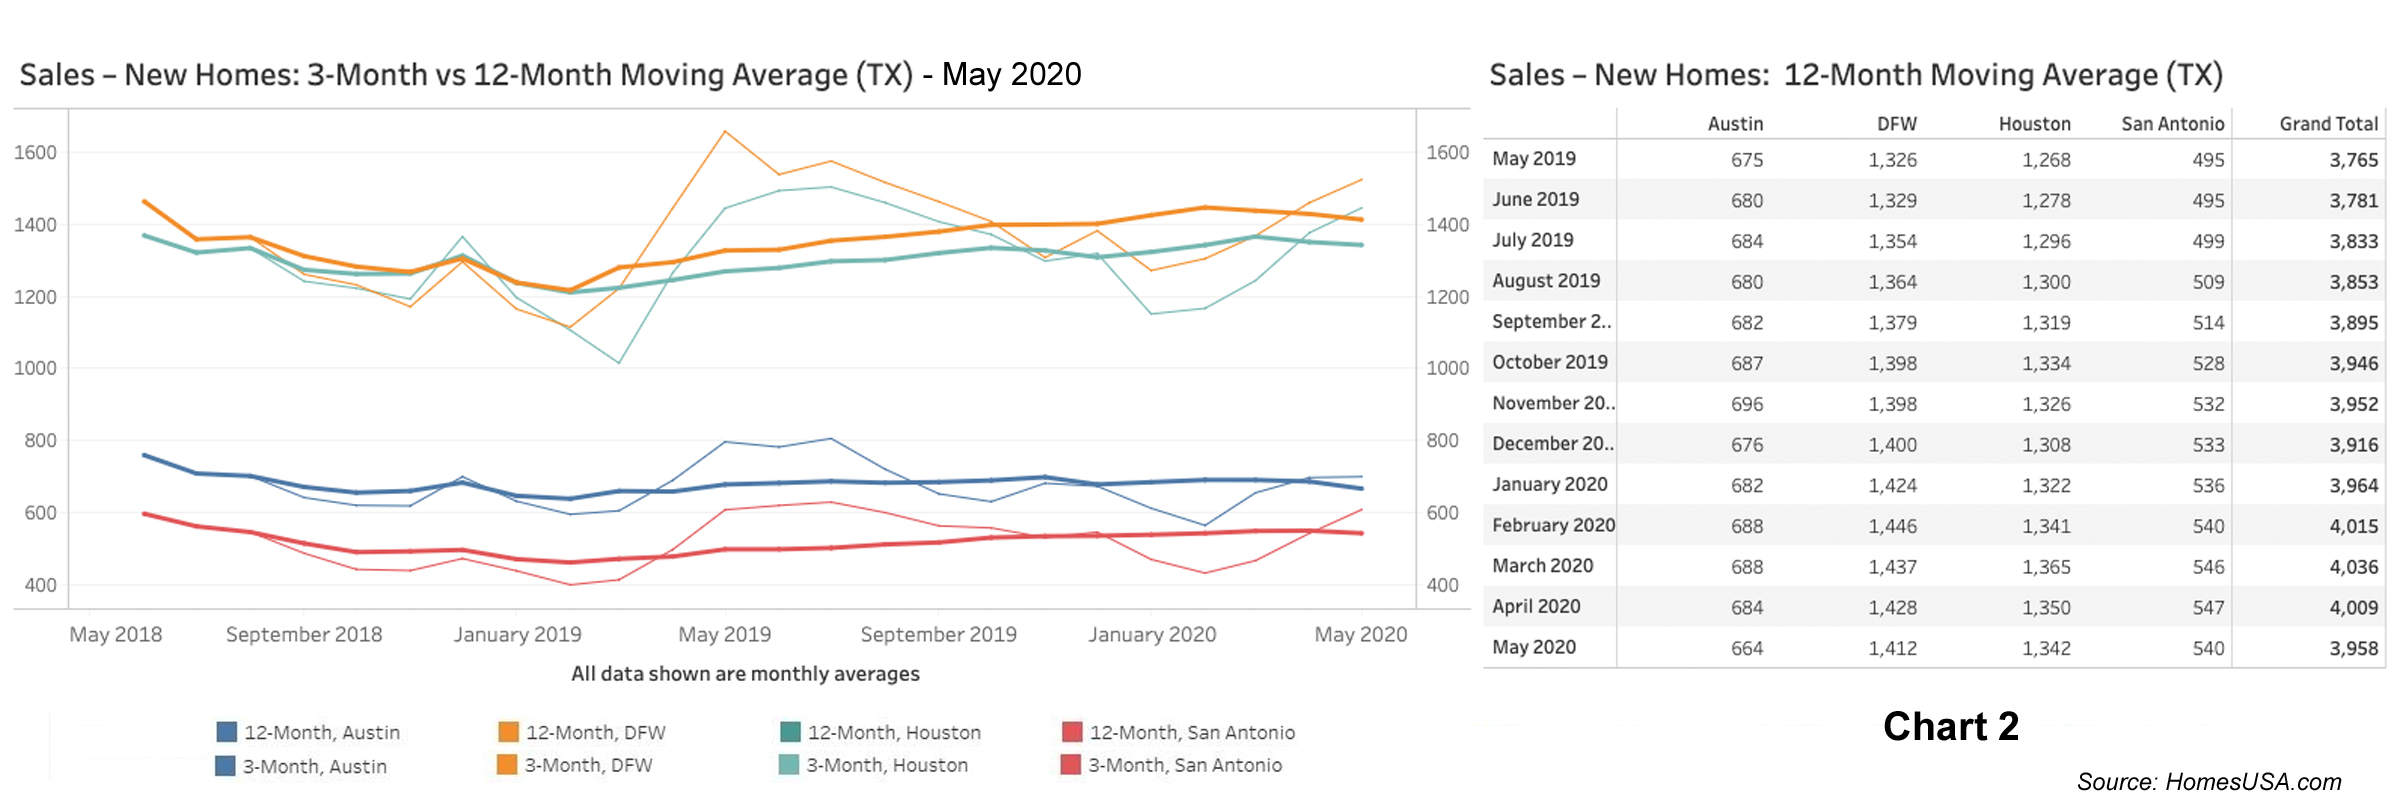 Chart 2: Texas New Home Sales - May 2020